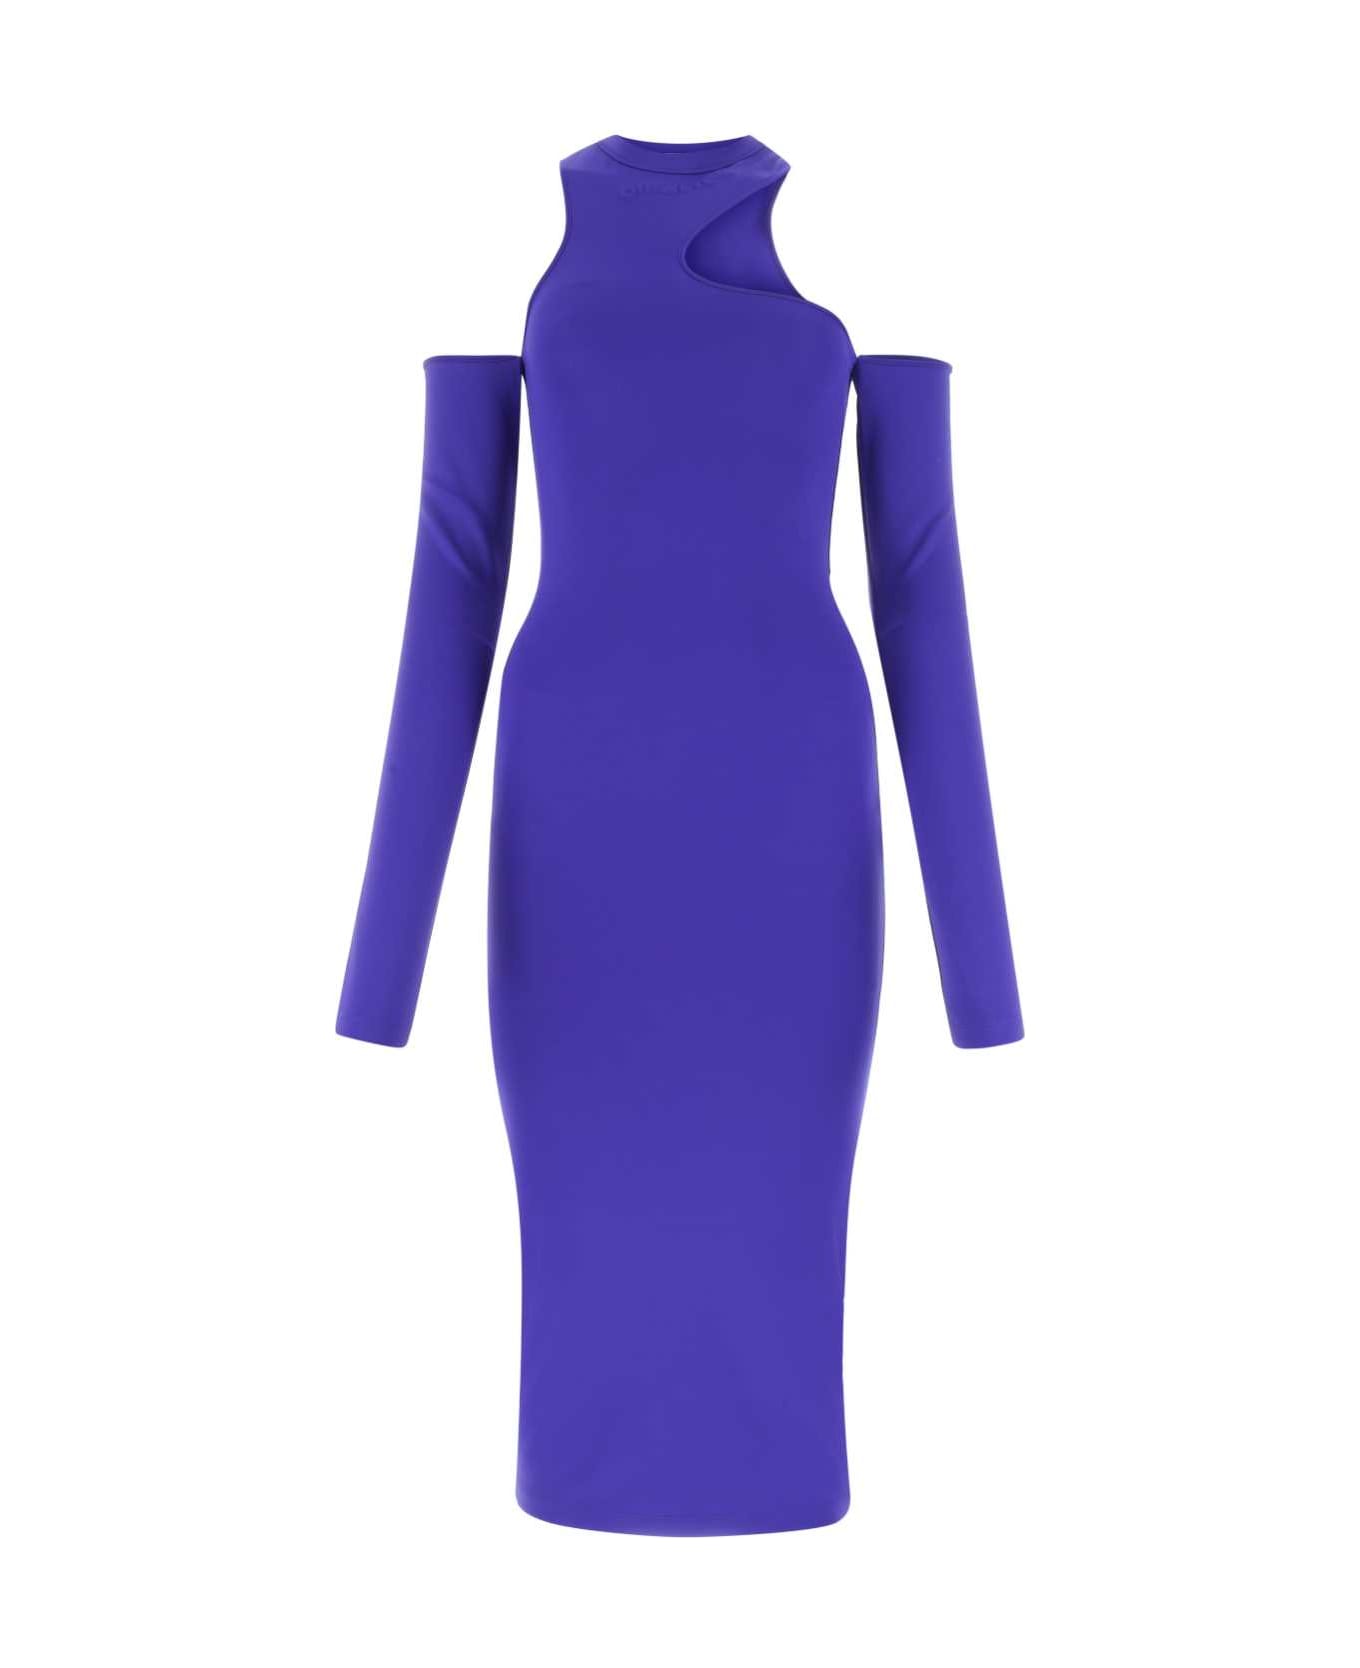 Off-White Purple Stretch Nylon Dress - 3737